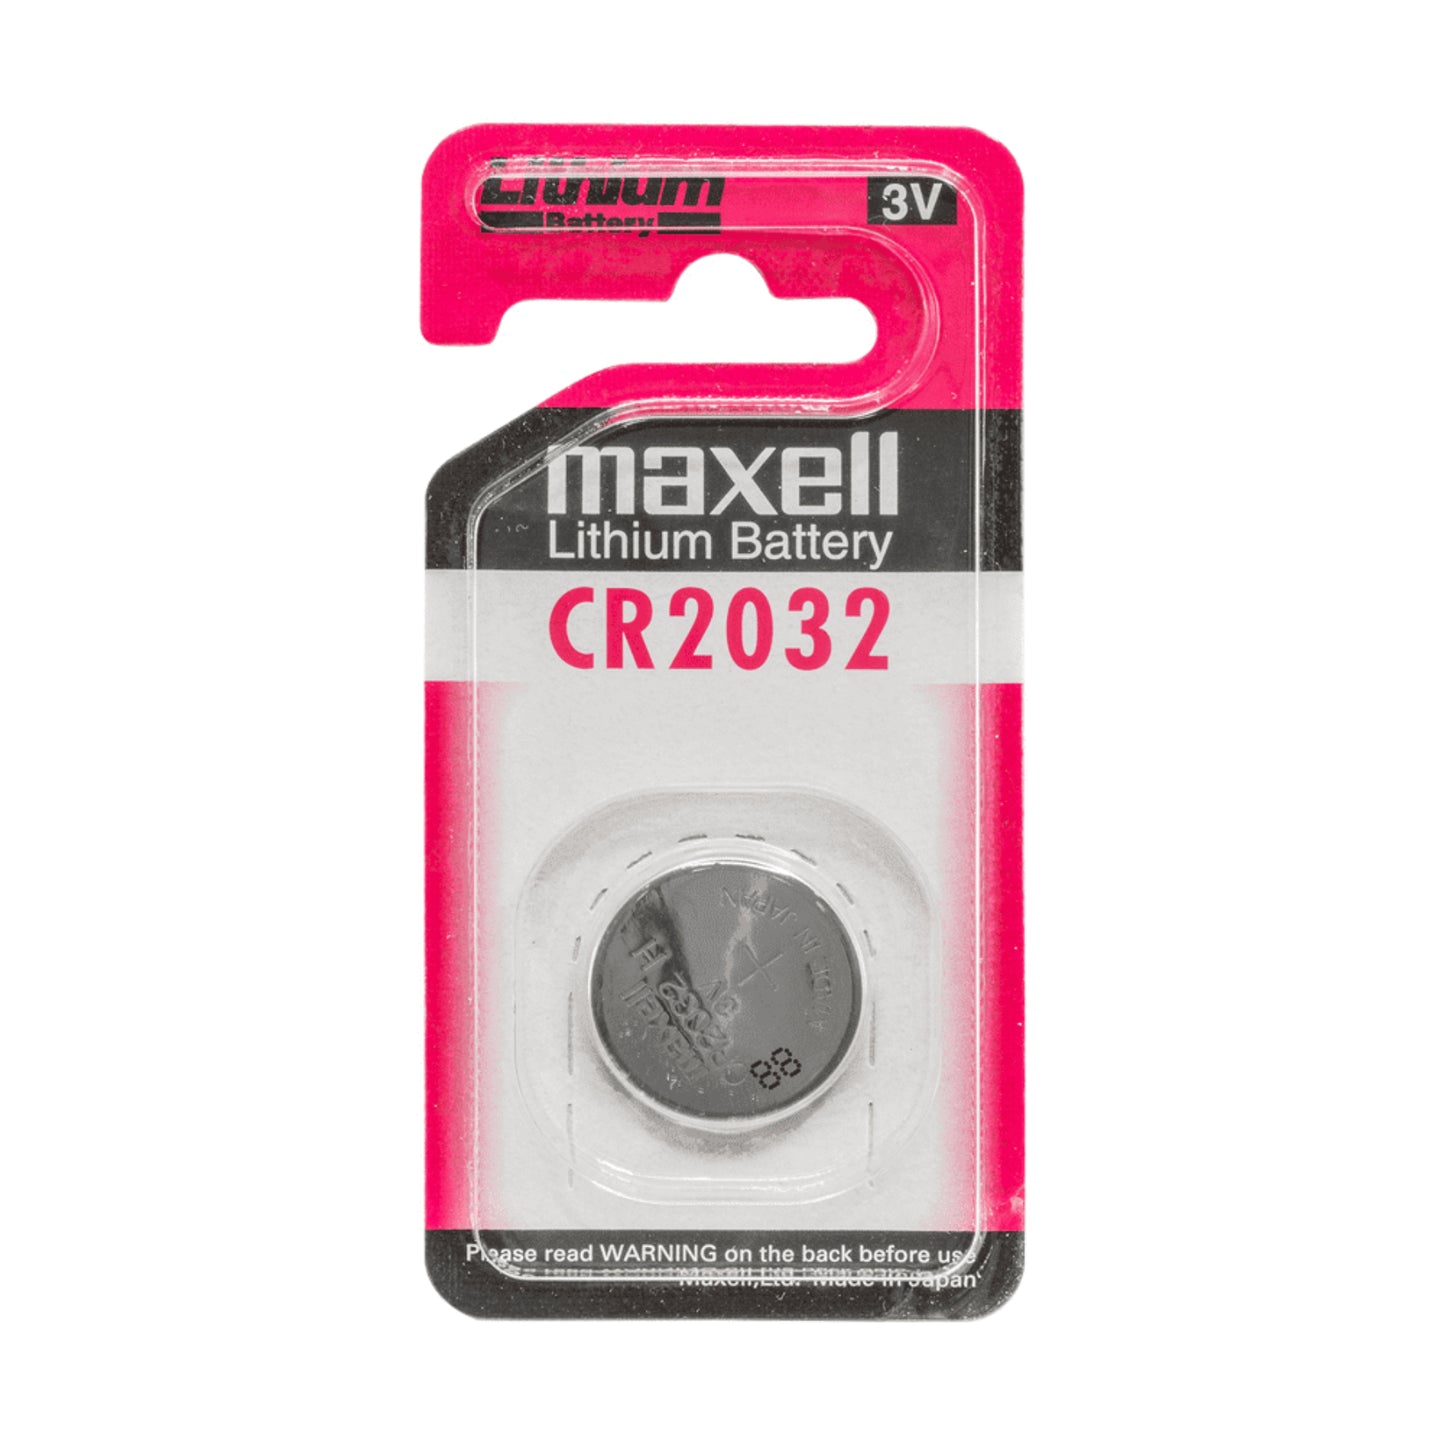 Buy Lithium battery CR2032 3V Maxell - 1pc. Botland - Robotic Shop